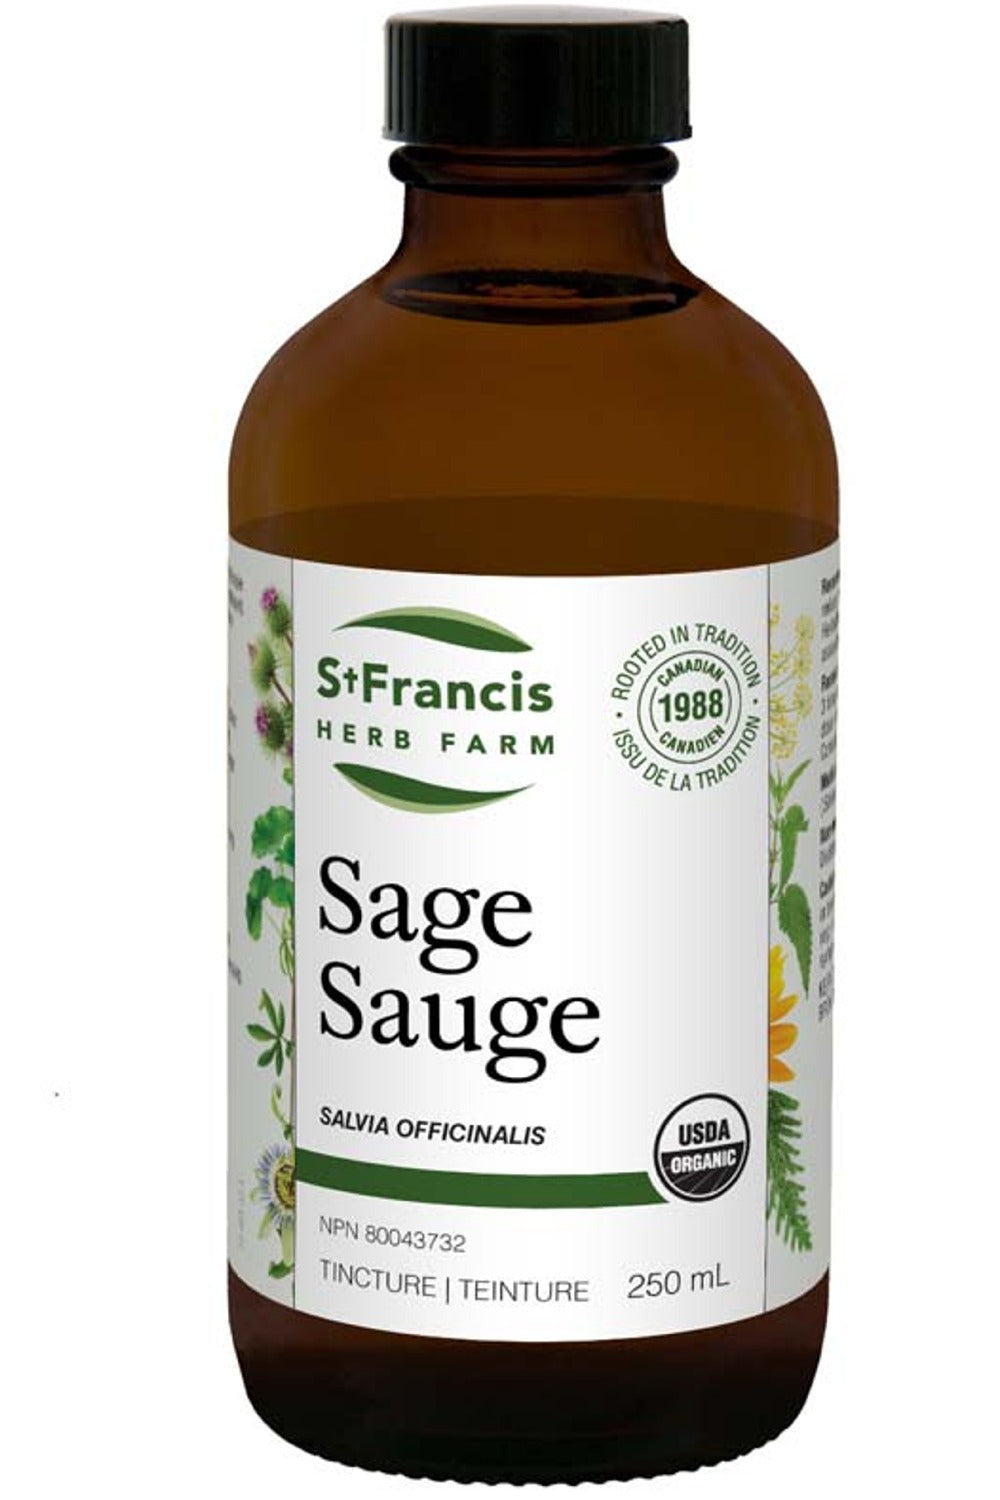 ST FRANCIS HERB FARM Sage (250 ml)